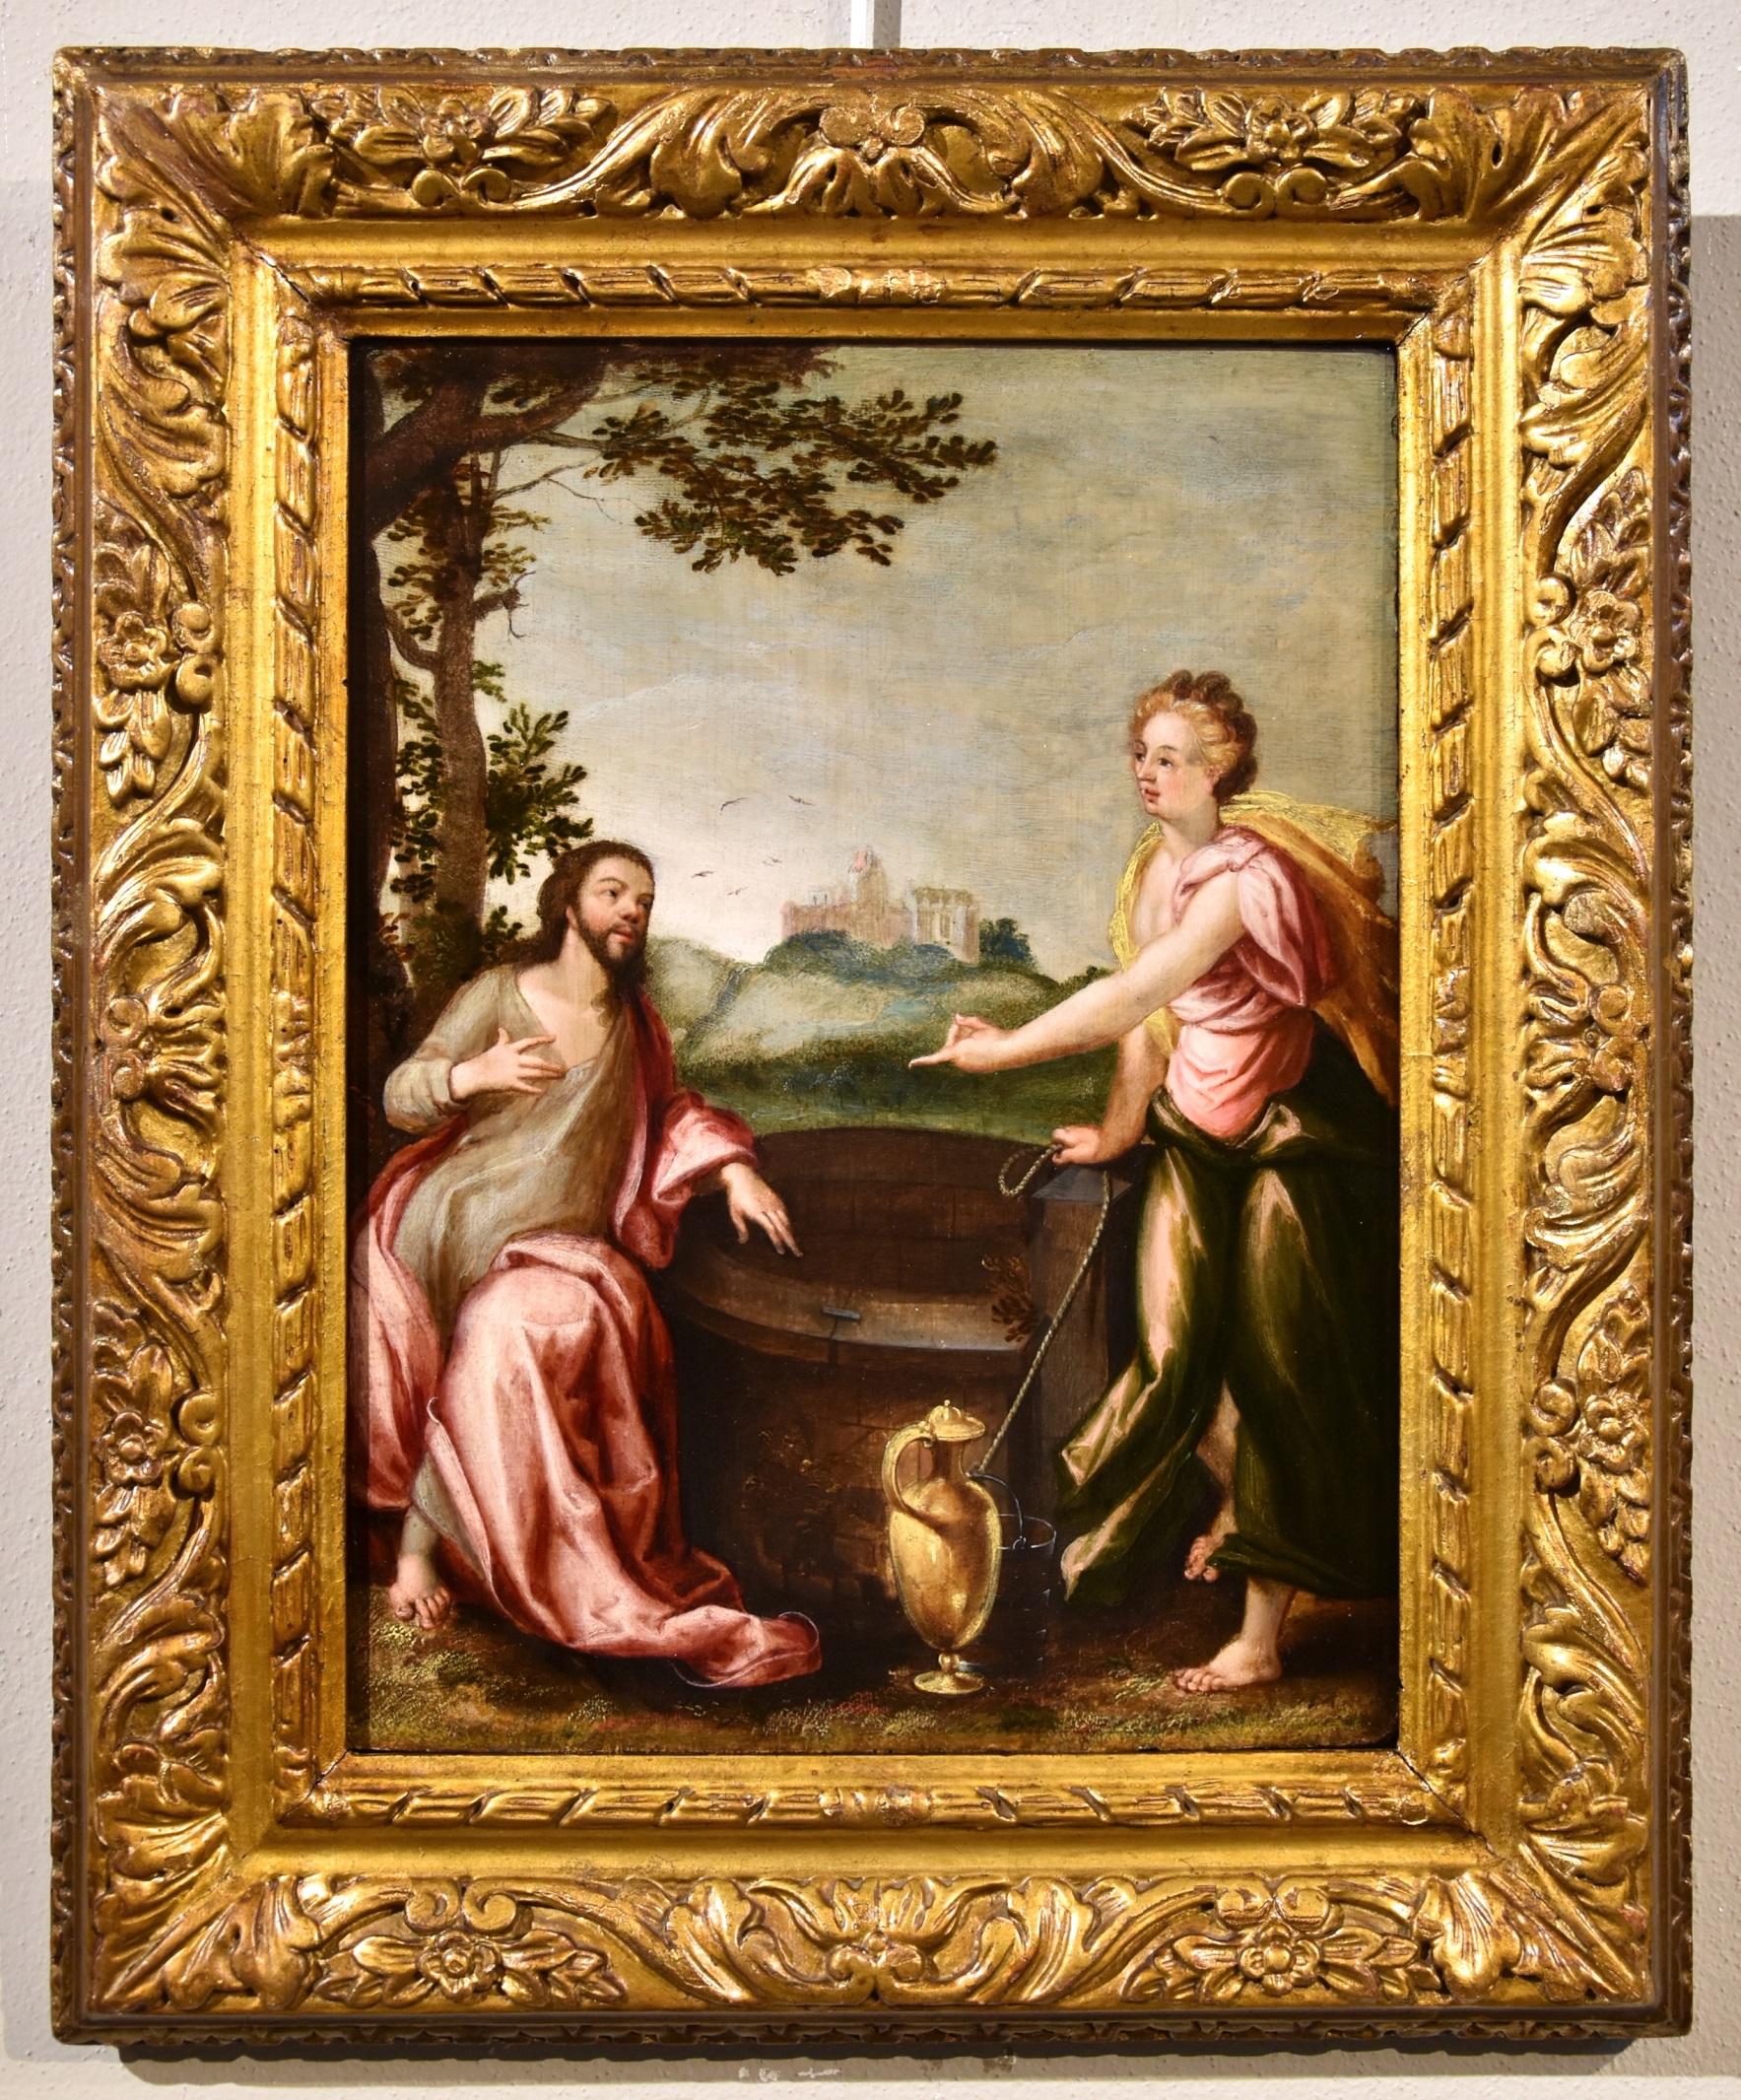 Ludovico Pozzoserrato (Antwerp circa 1550 - Treviso 1605) Landscape Painting – Pozzoserrato, Ölgemälde auf Tisch, Christ Samaritan Frau, Alter Meister, 17. Jahrhundert, Alter Meister